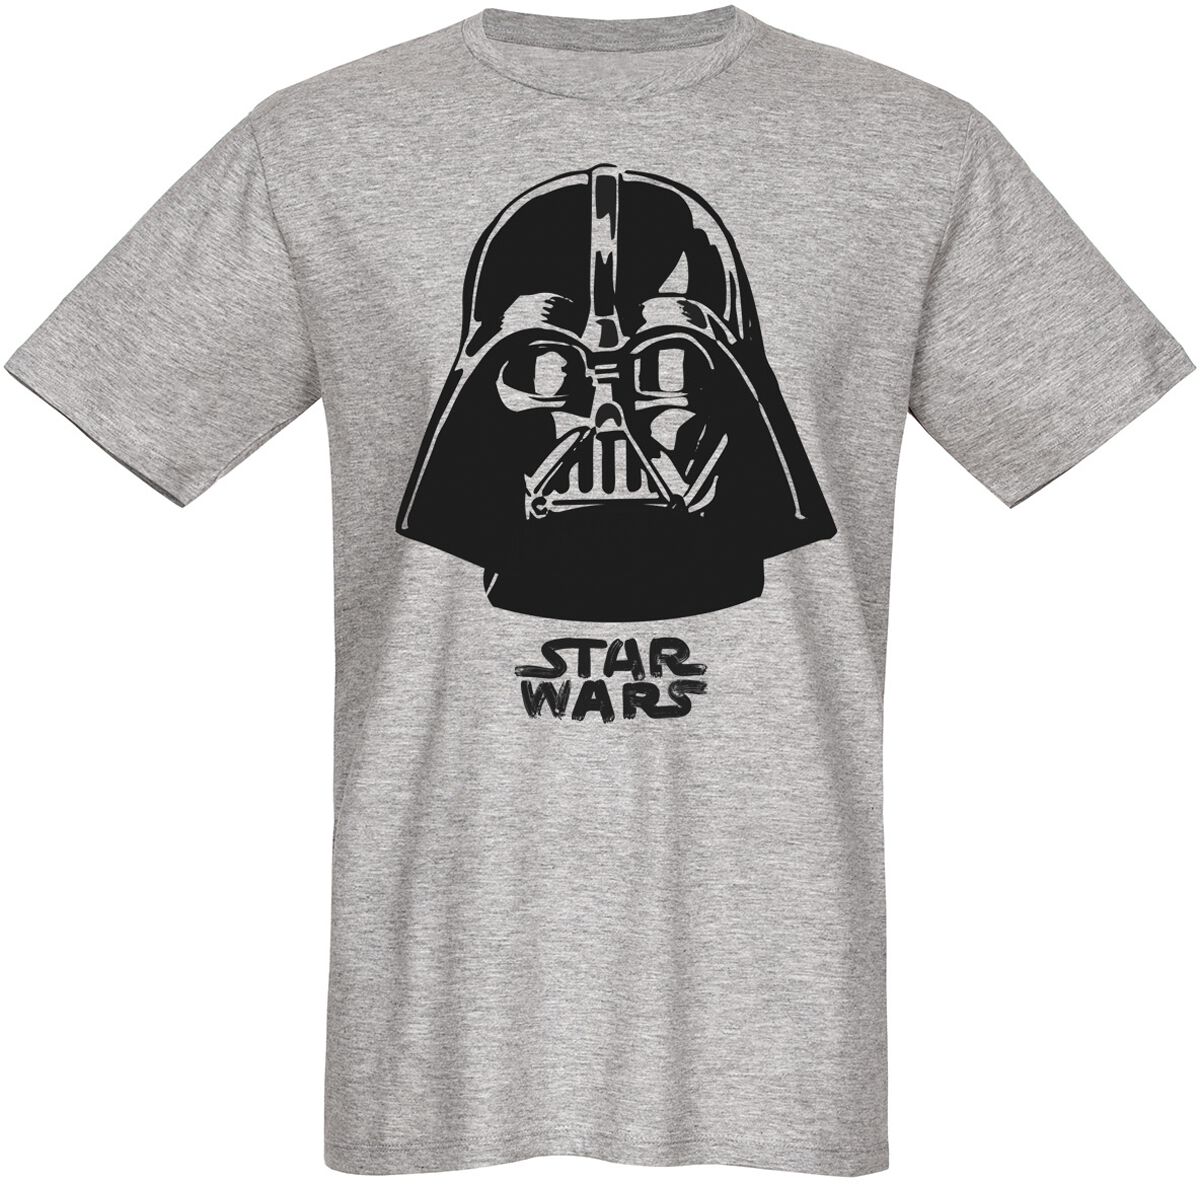 Image of T-Shirt di Star Wars - Darth Vader - The boss - S a 3XL - Uomo - grigio